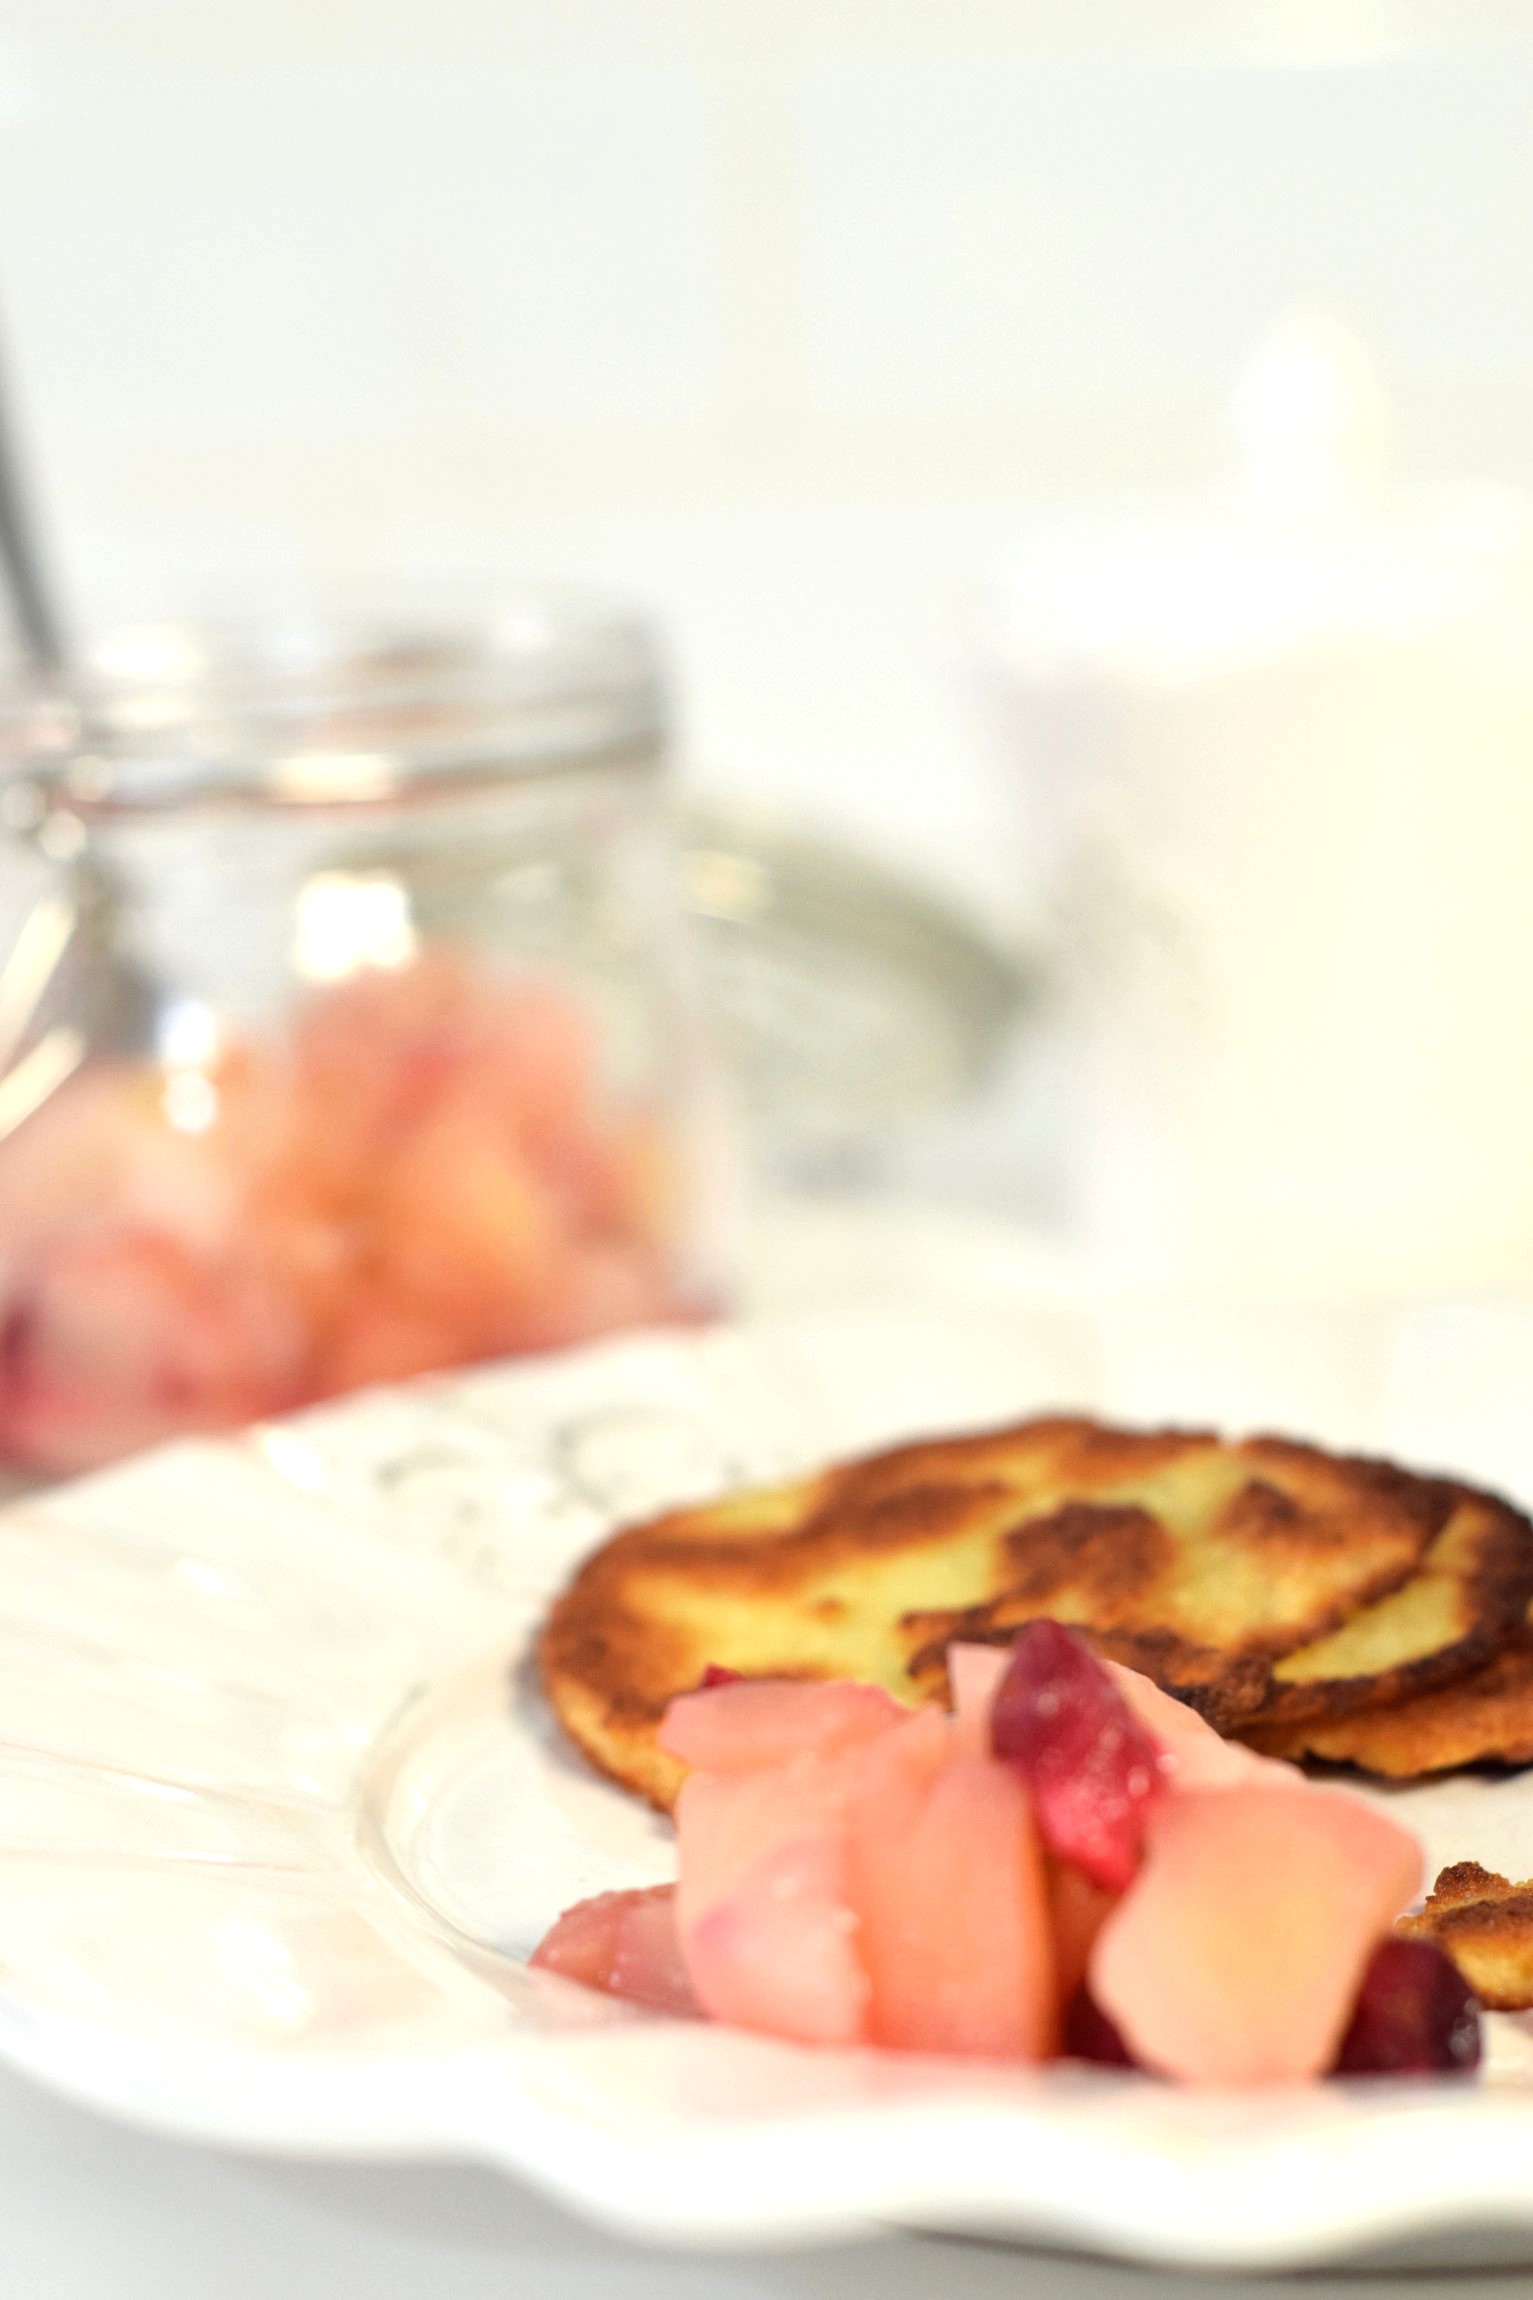 Polish potato pancakes with fruit saute recipe04